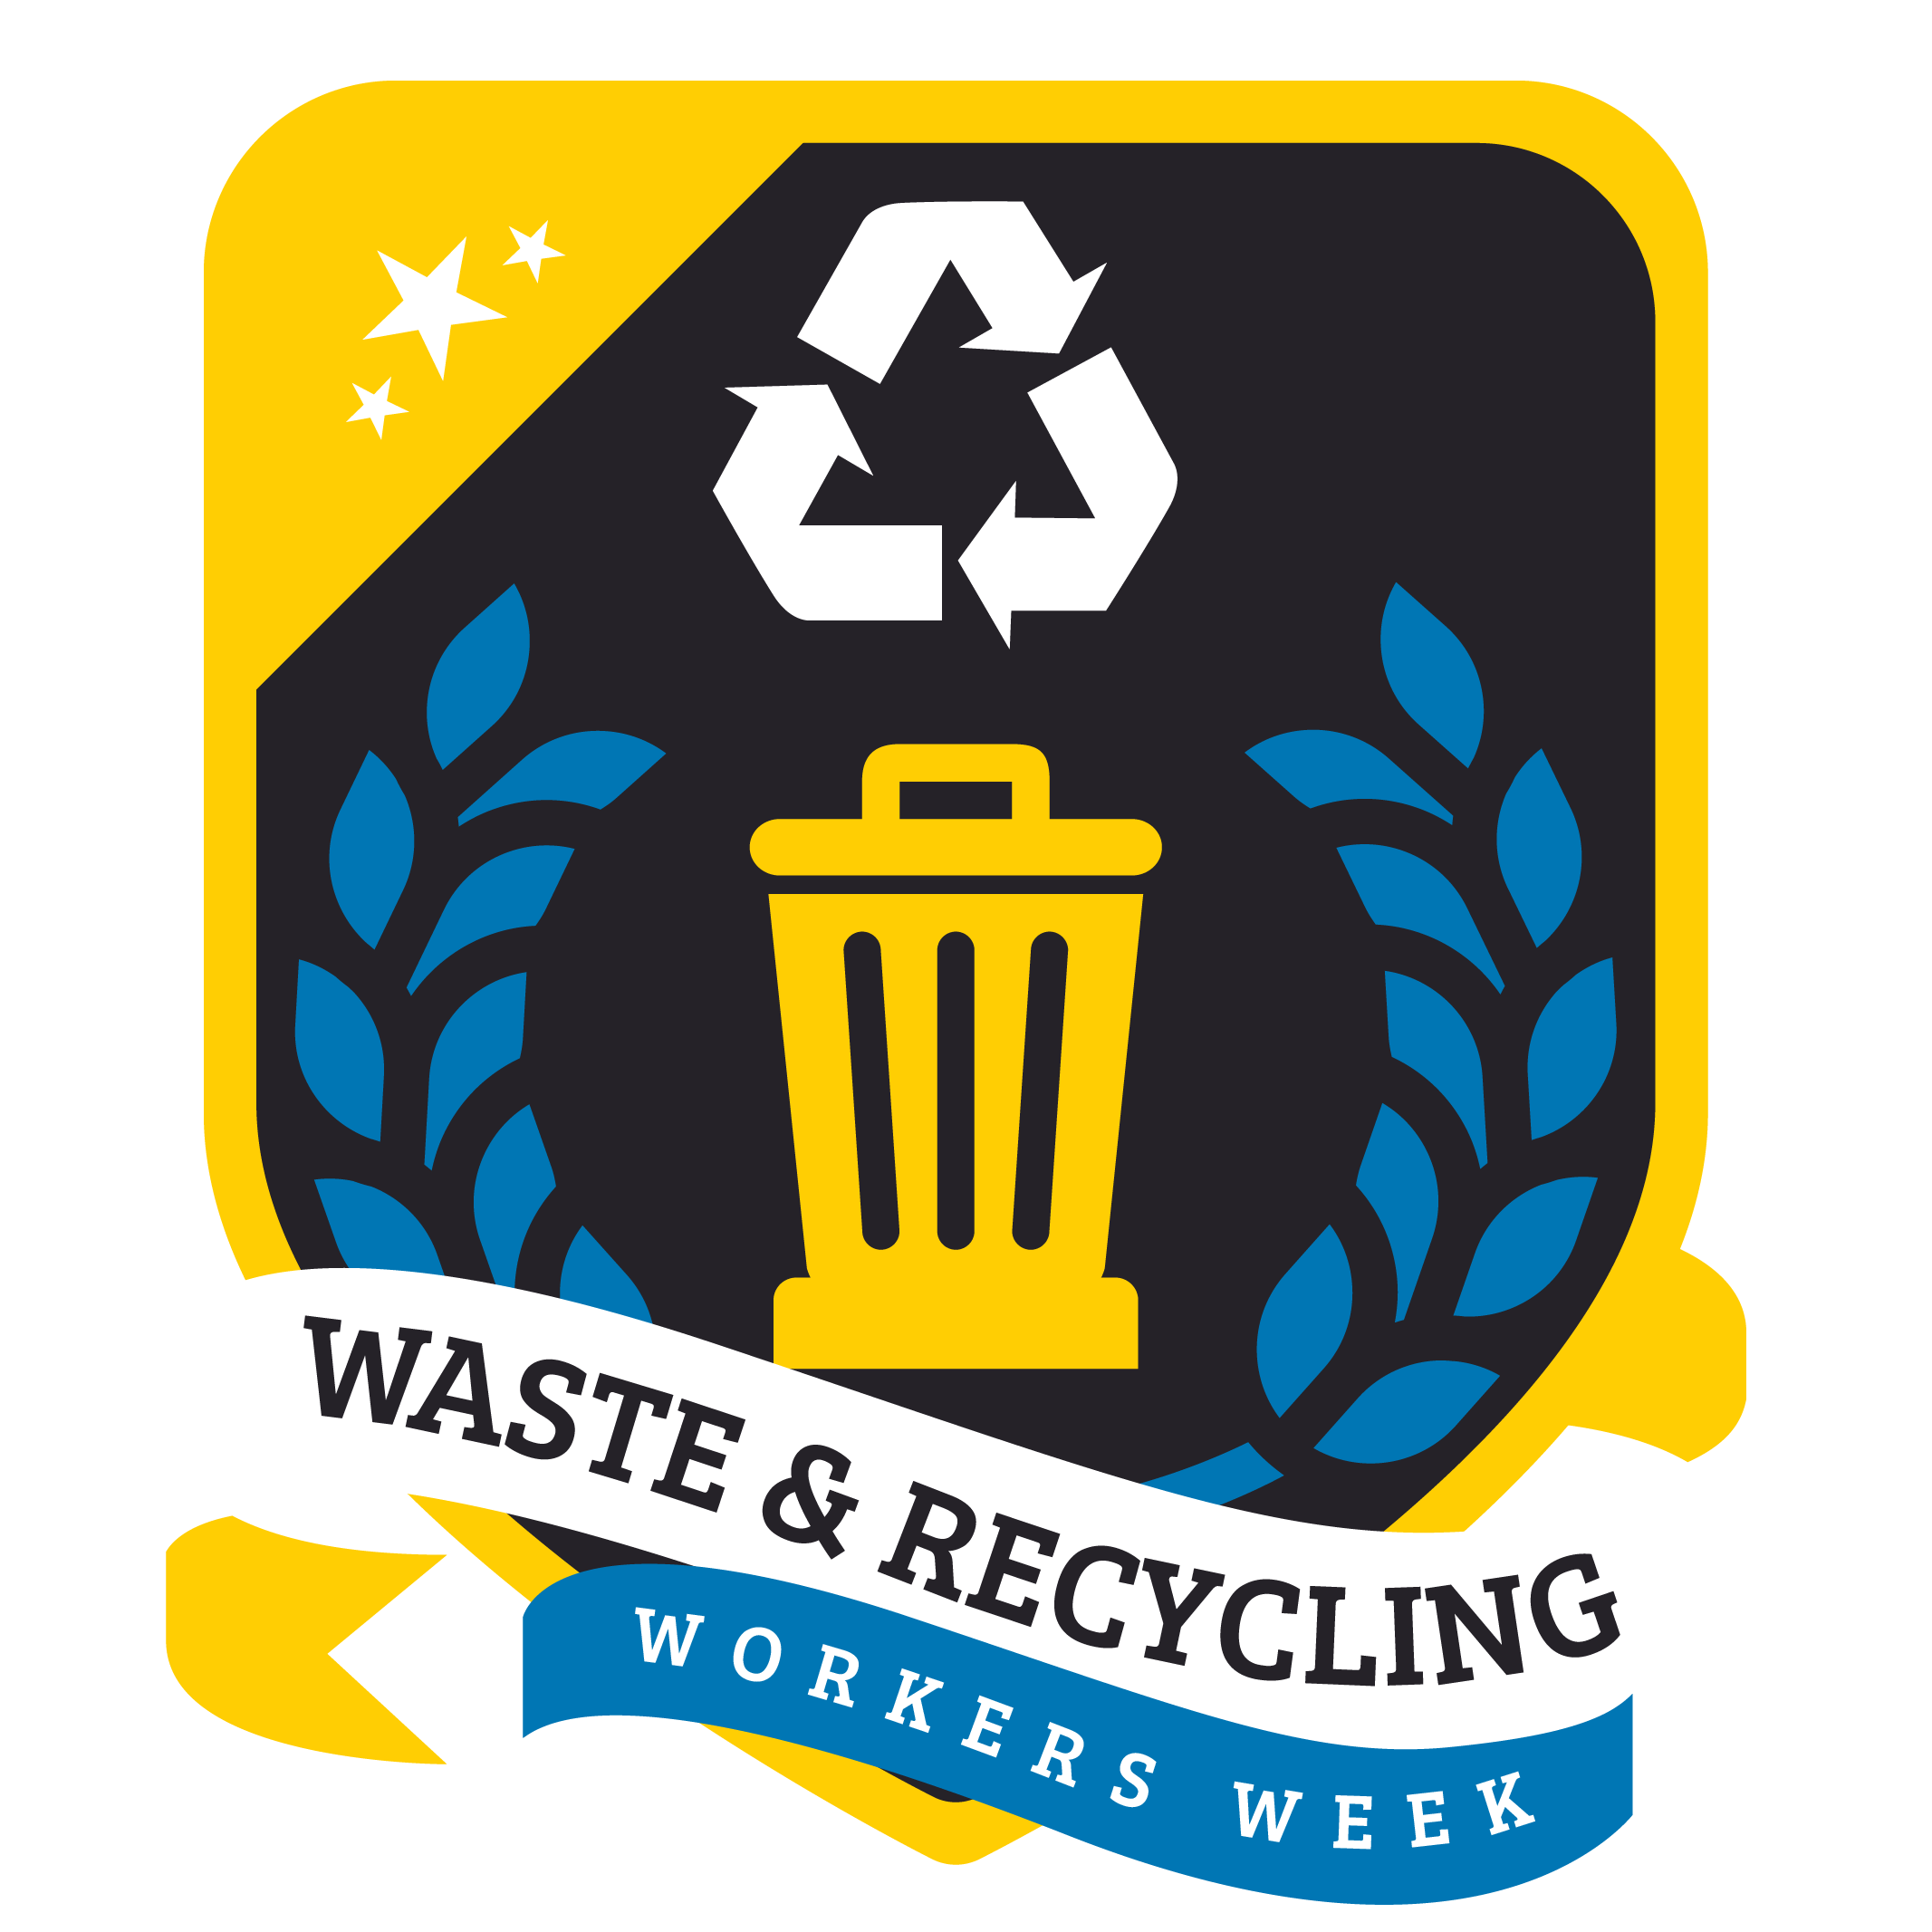 Waste & Recycling Workers Week